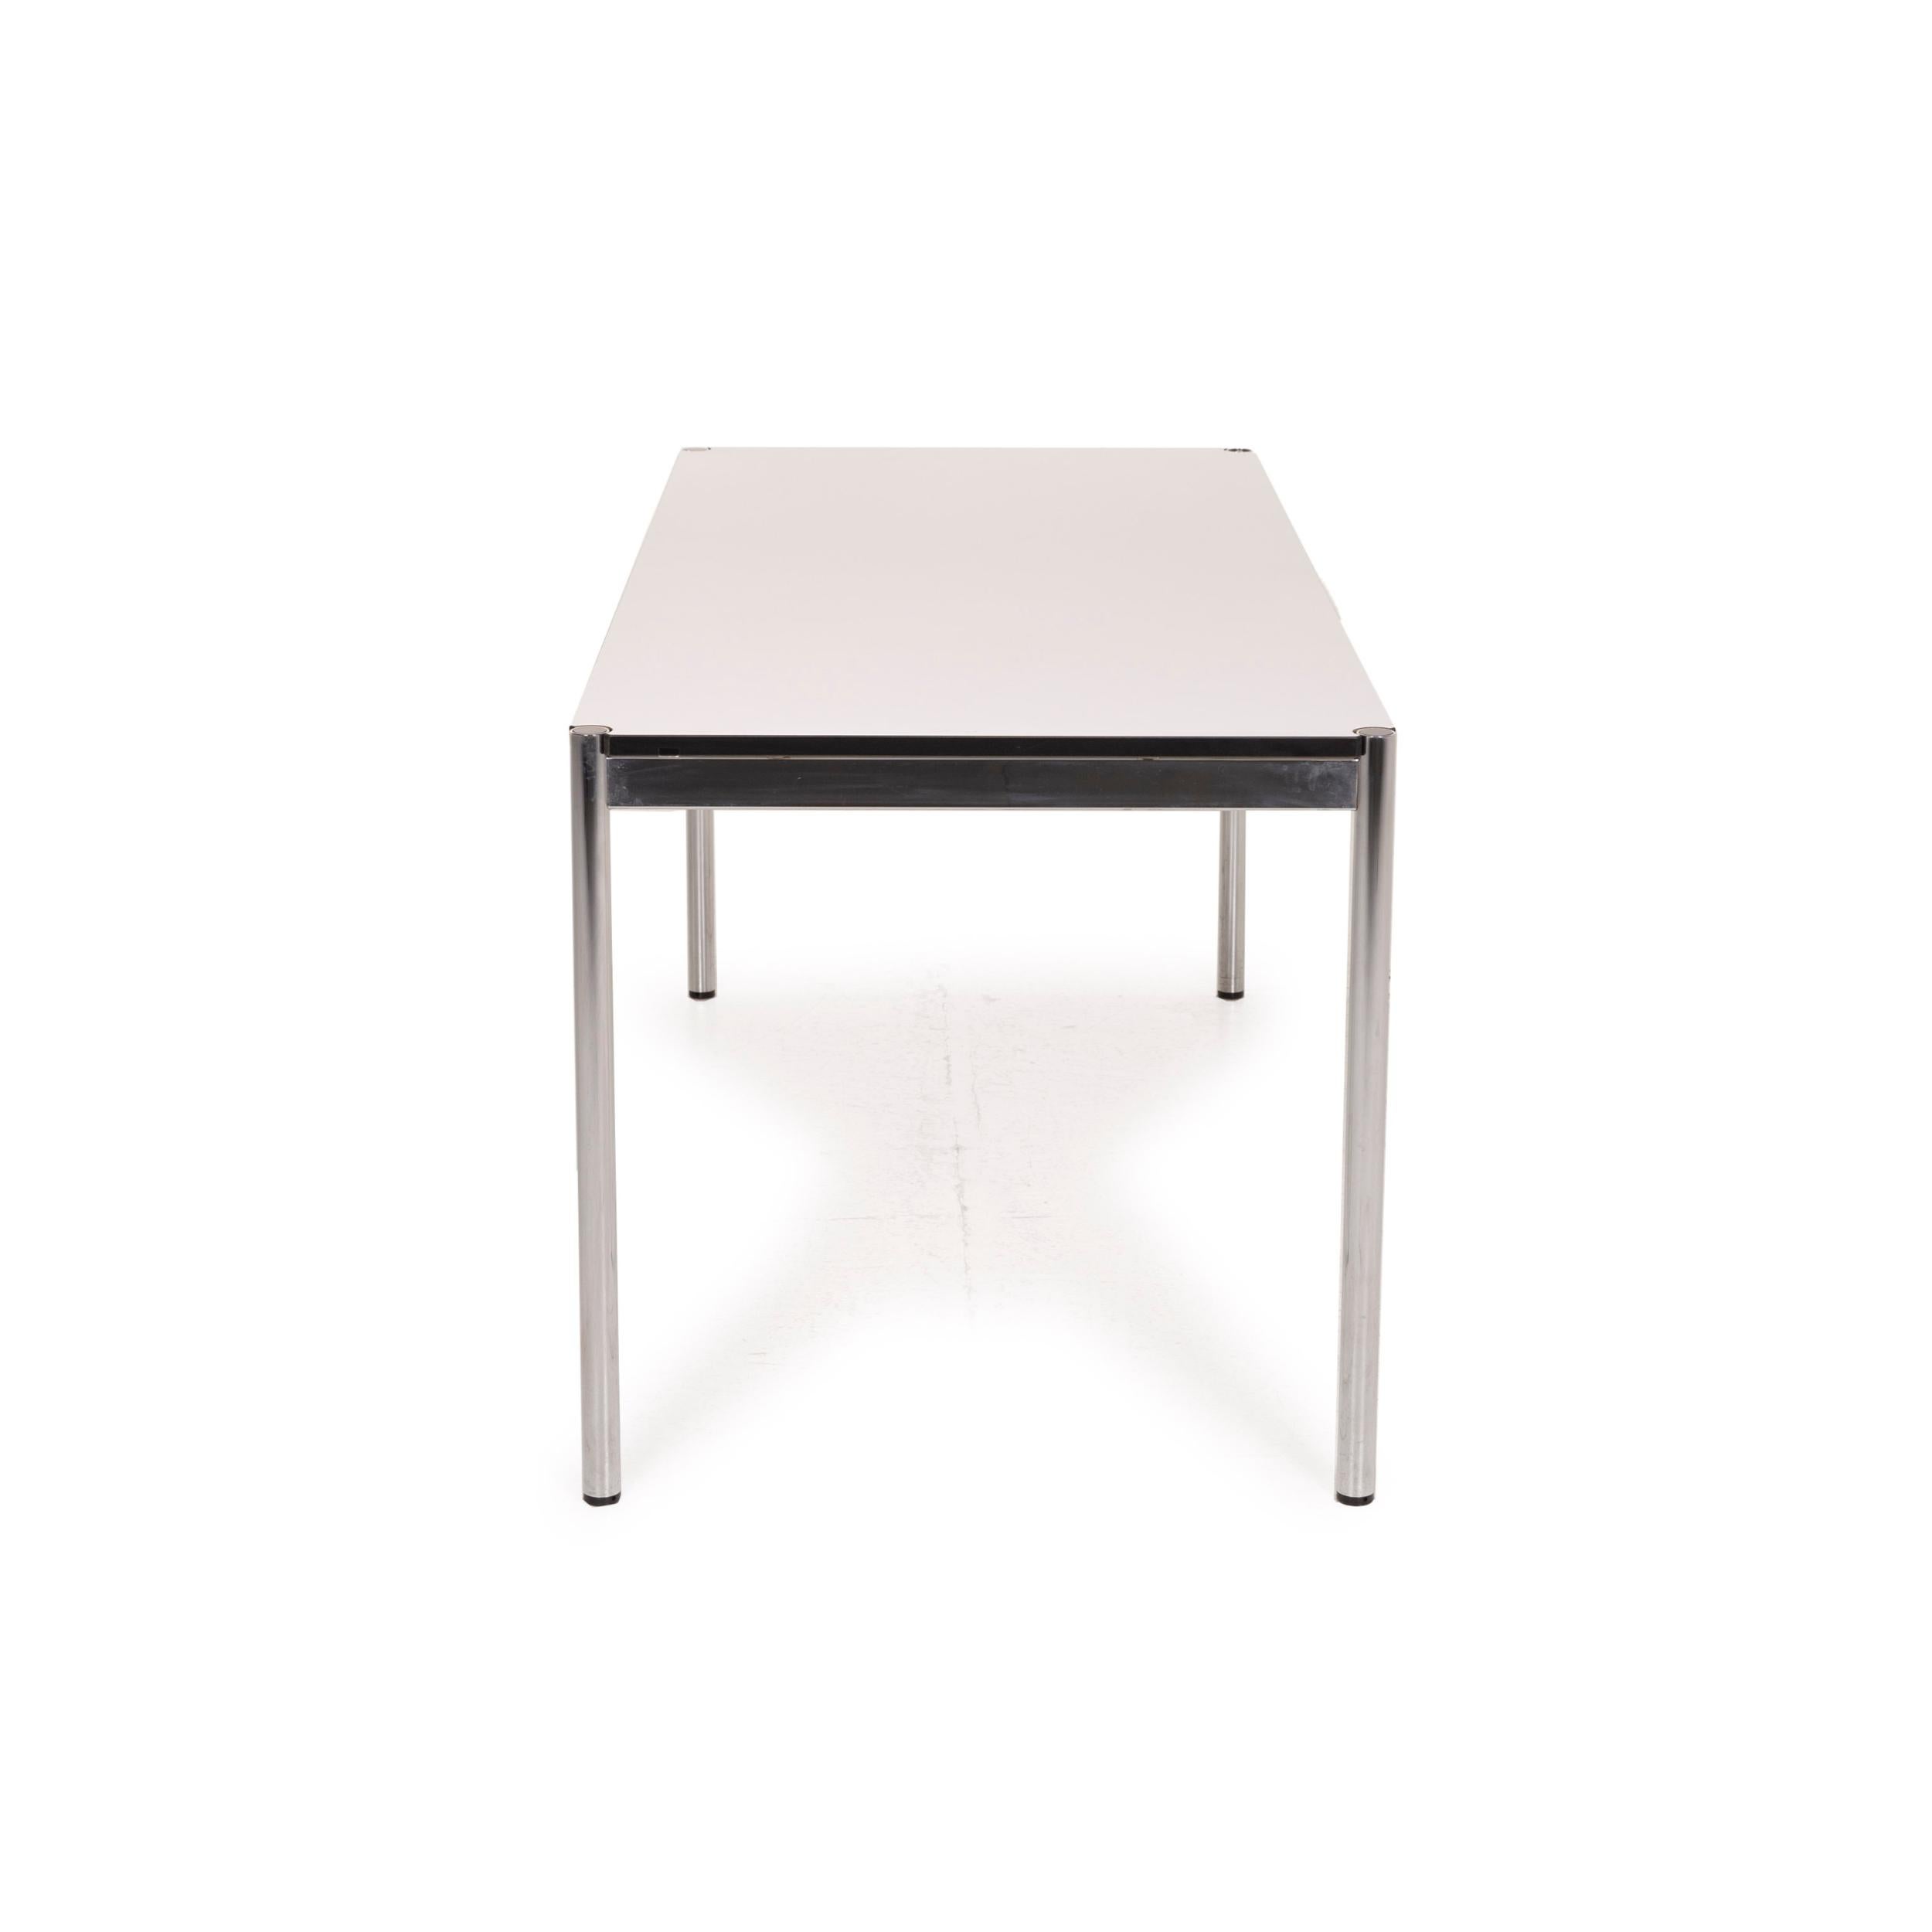 USM Haller Metal Table White Desk Chrome For Sale 4